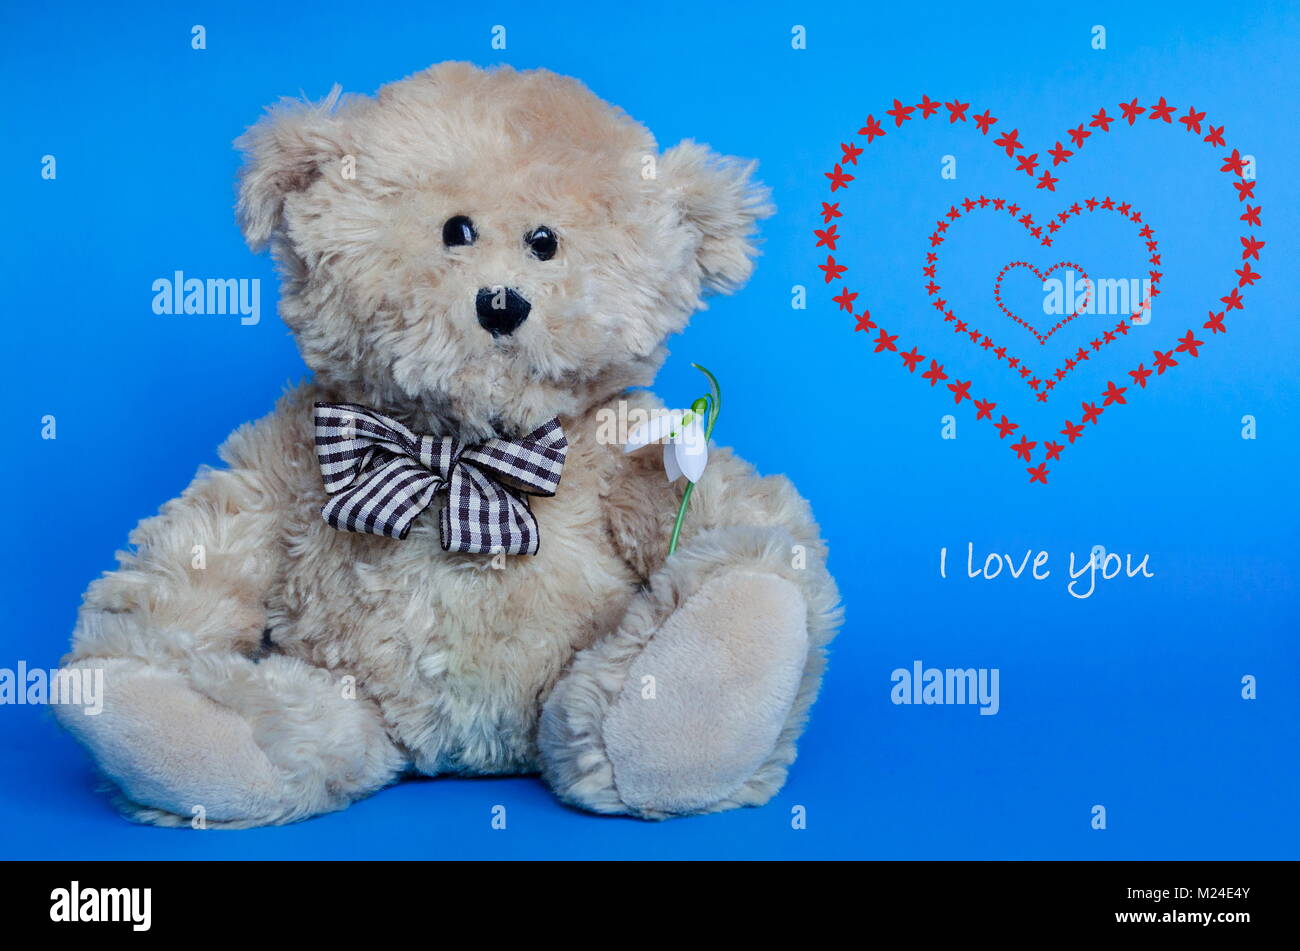 England Love Heart Flag Mascot Novelty Gift Teddy Bear 